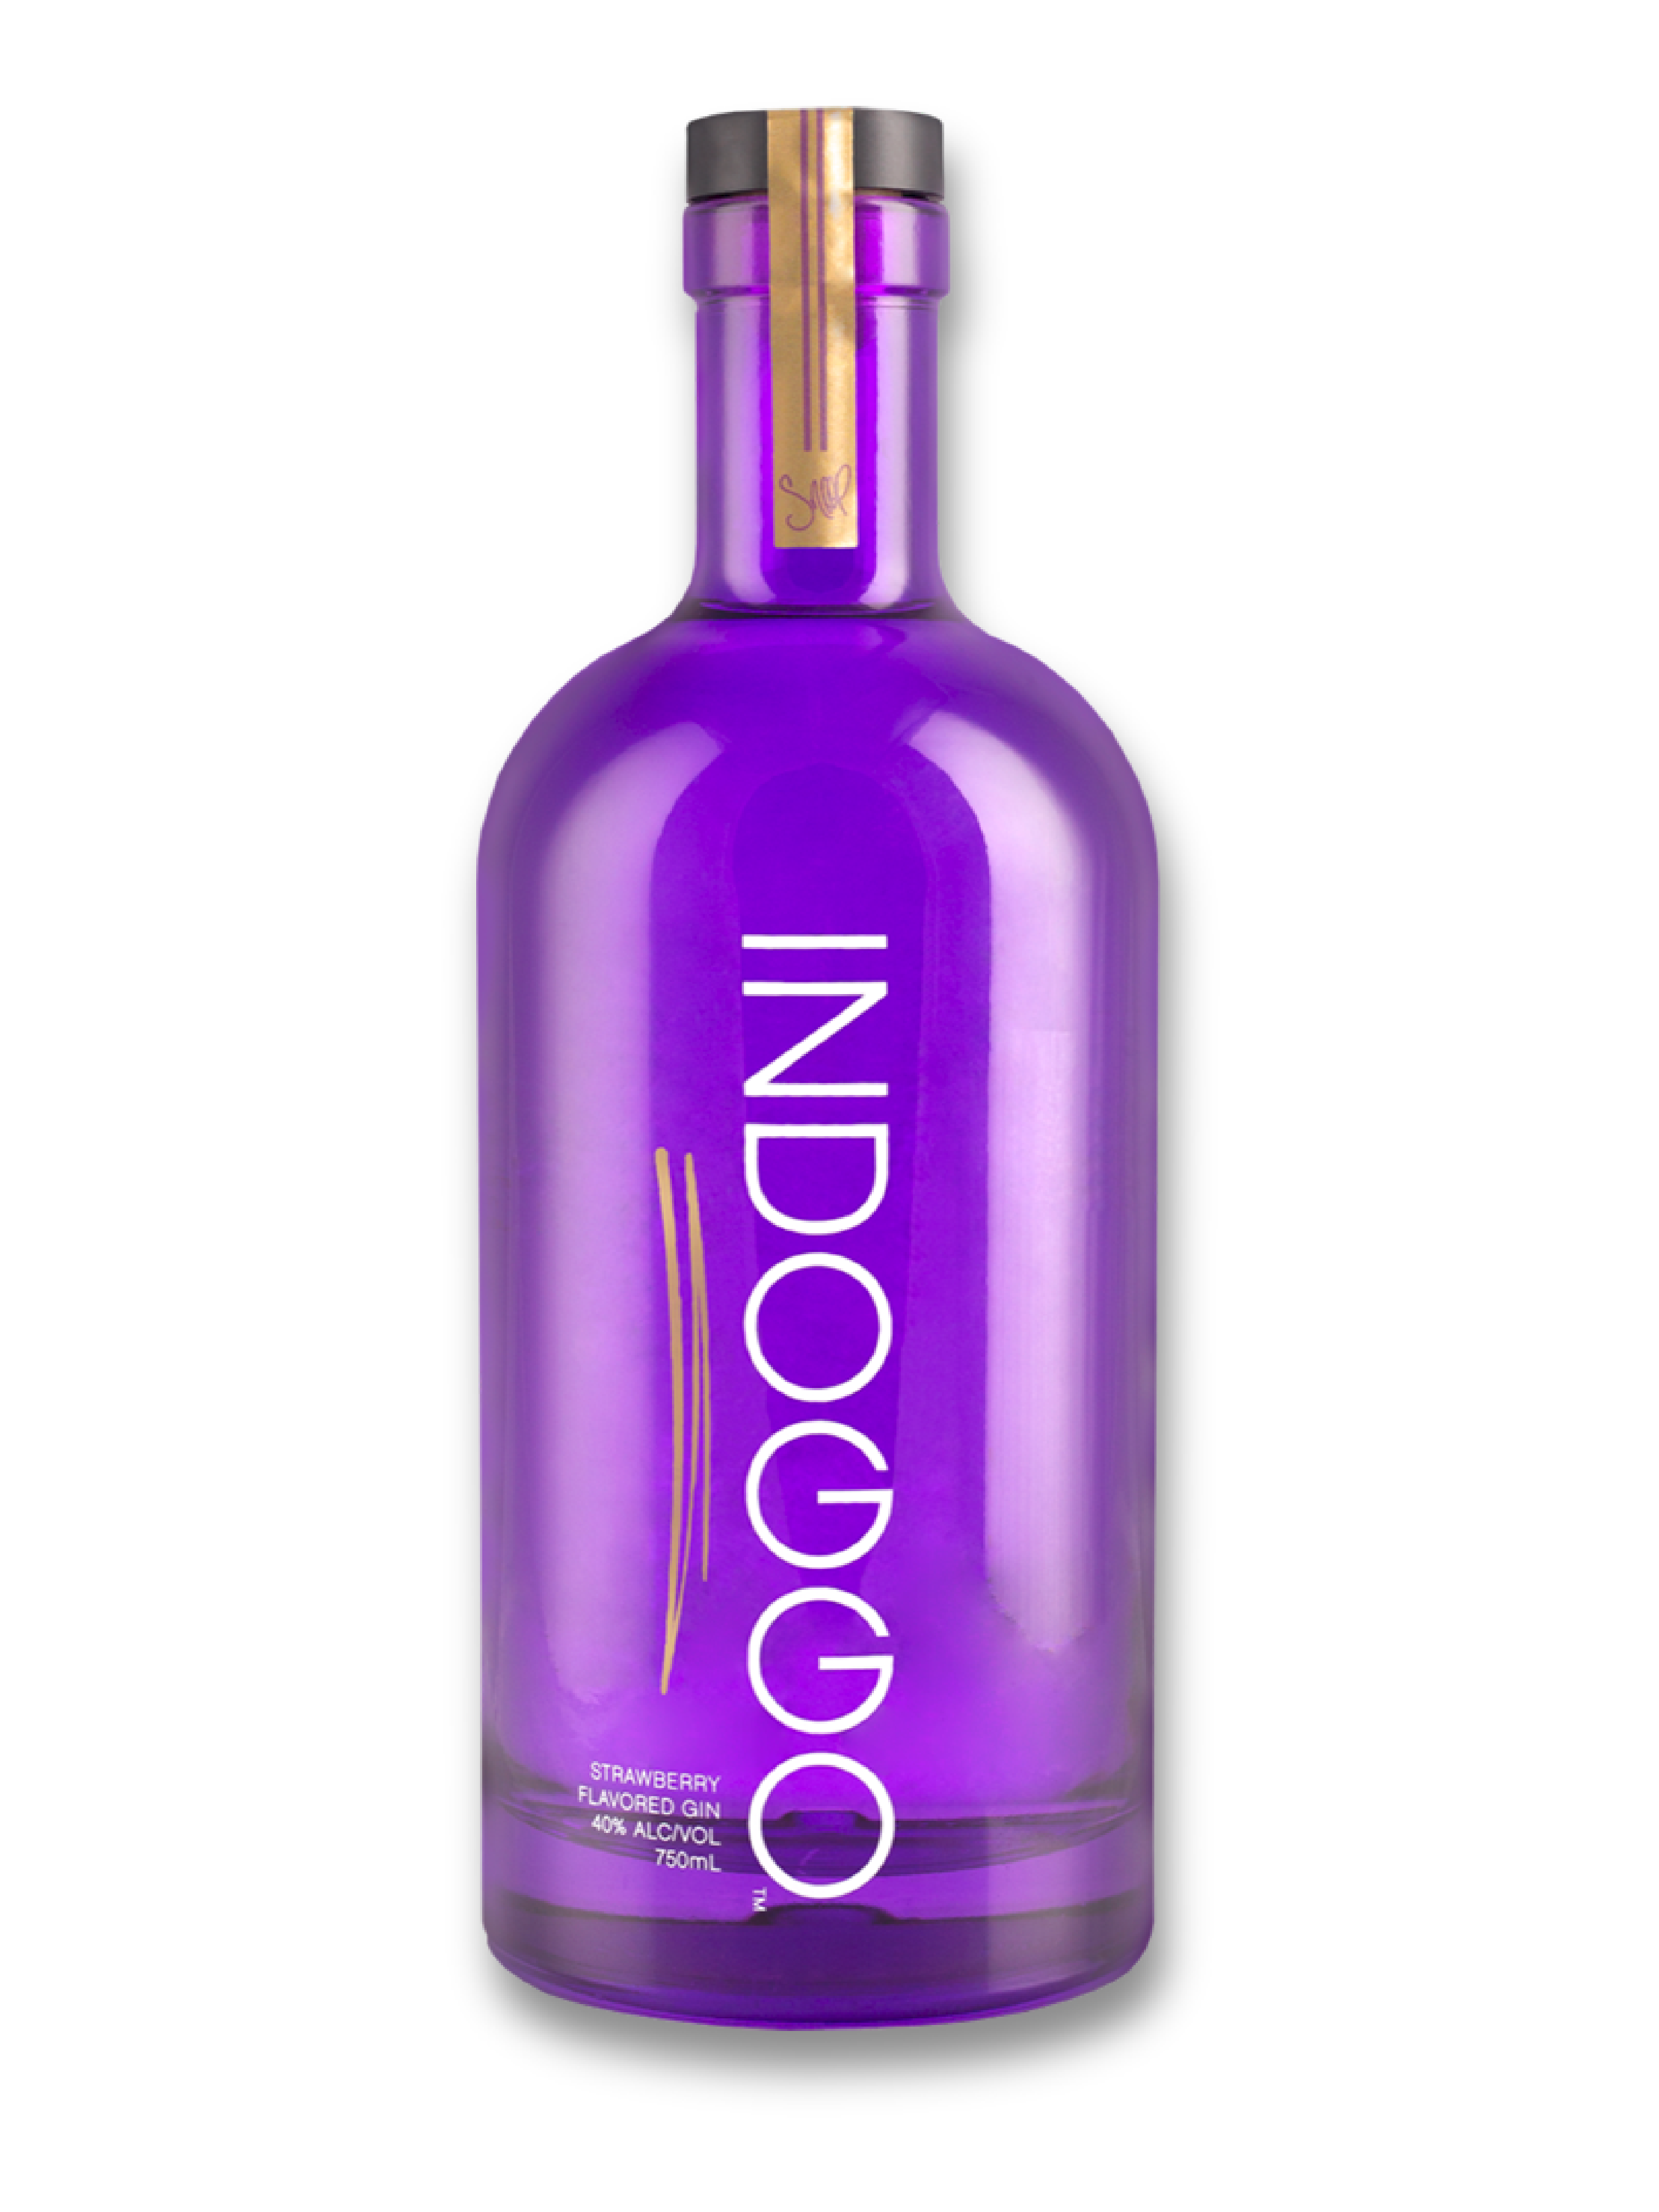 Indoggo Gin By Snoop Dogg (Limited Edition)